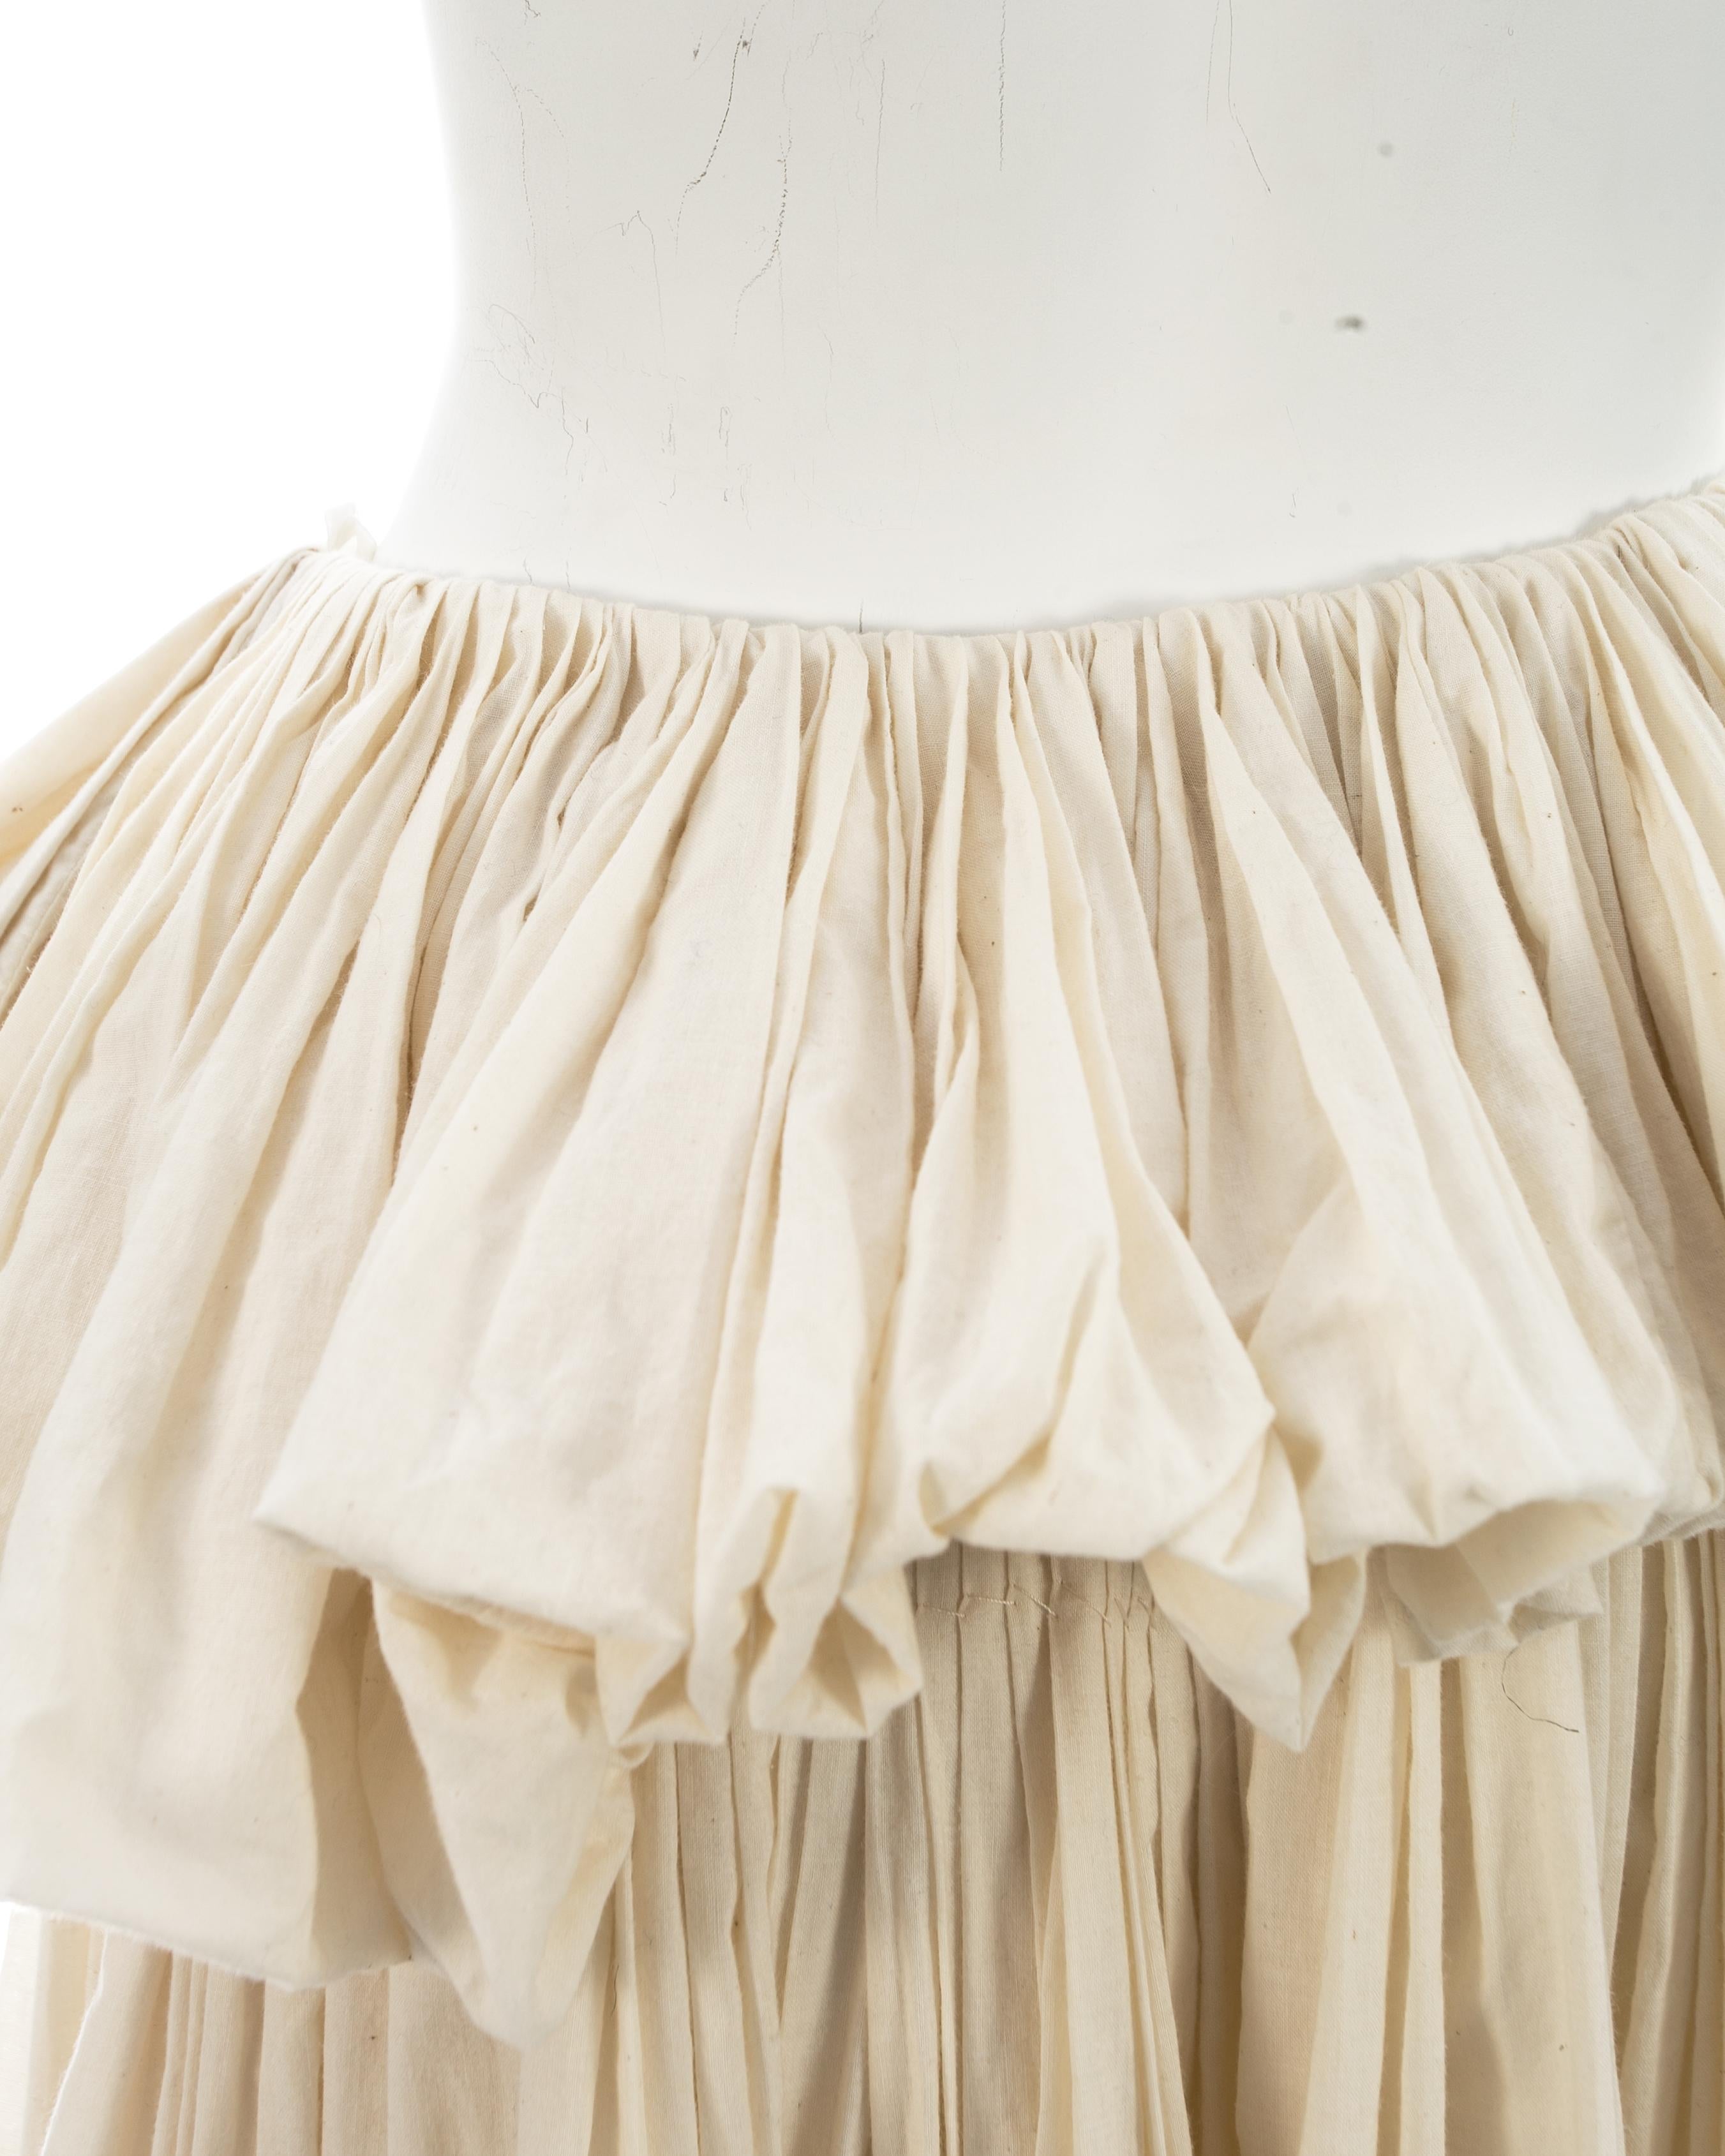 Yohji Yamamoto ivory cotton pleated mushroom skirt, ss 2000 For Sale 3